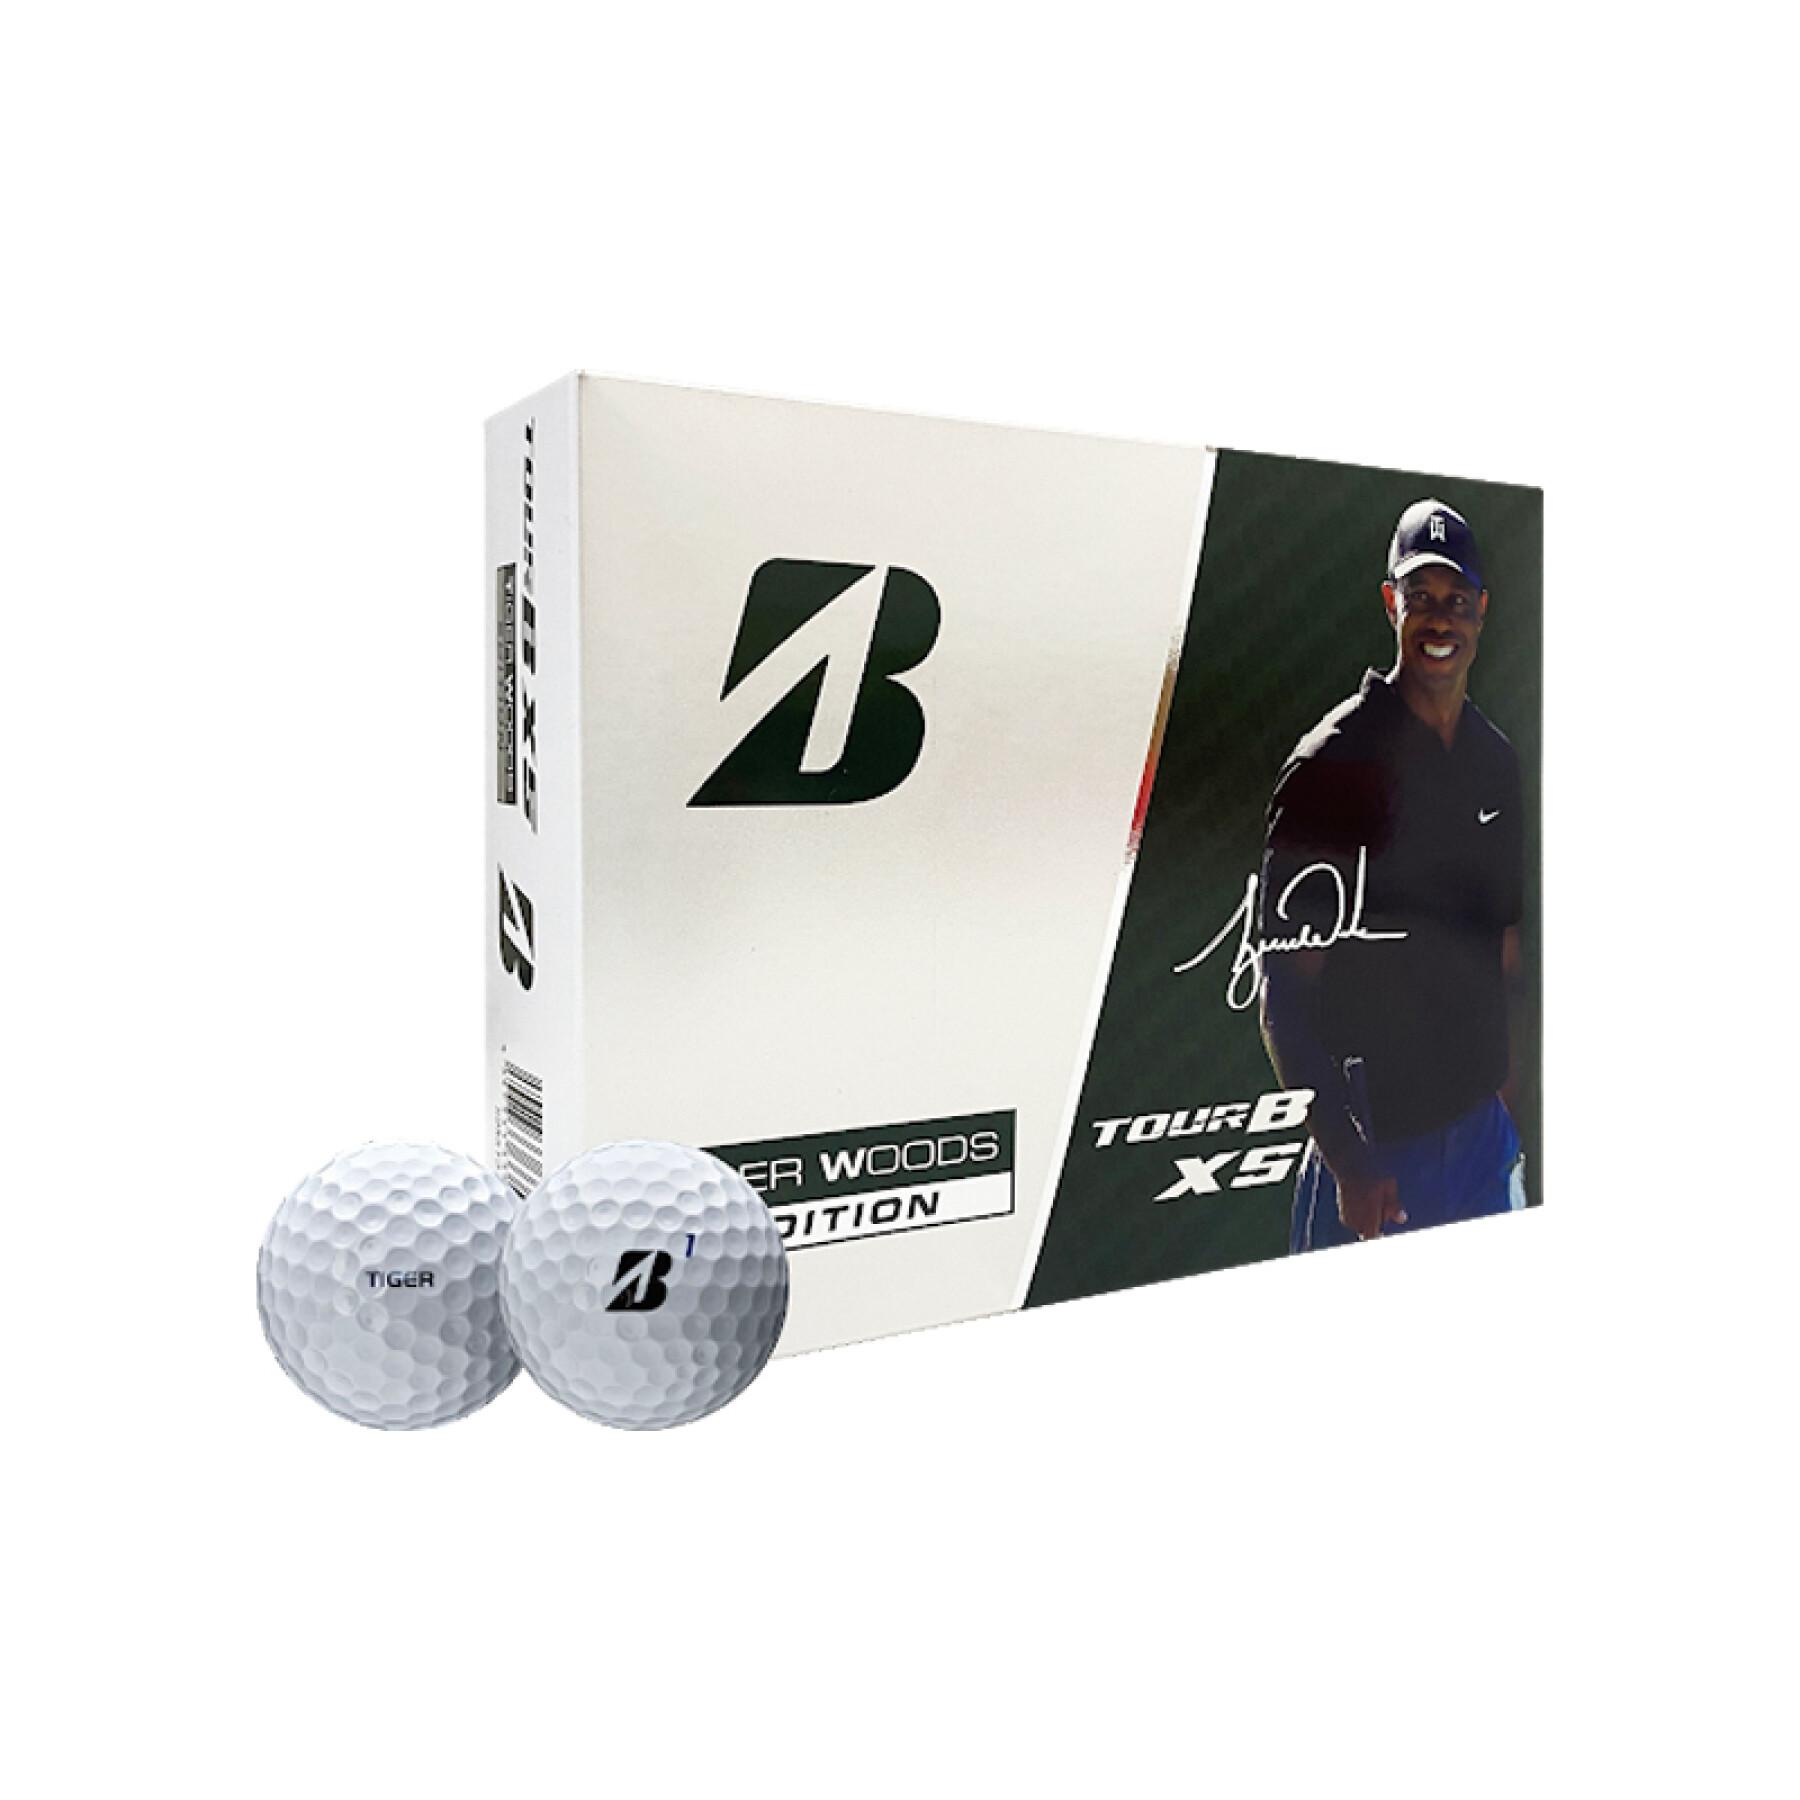 Golfbälle Bridgestone Tour B XS Tiger Edition